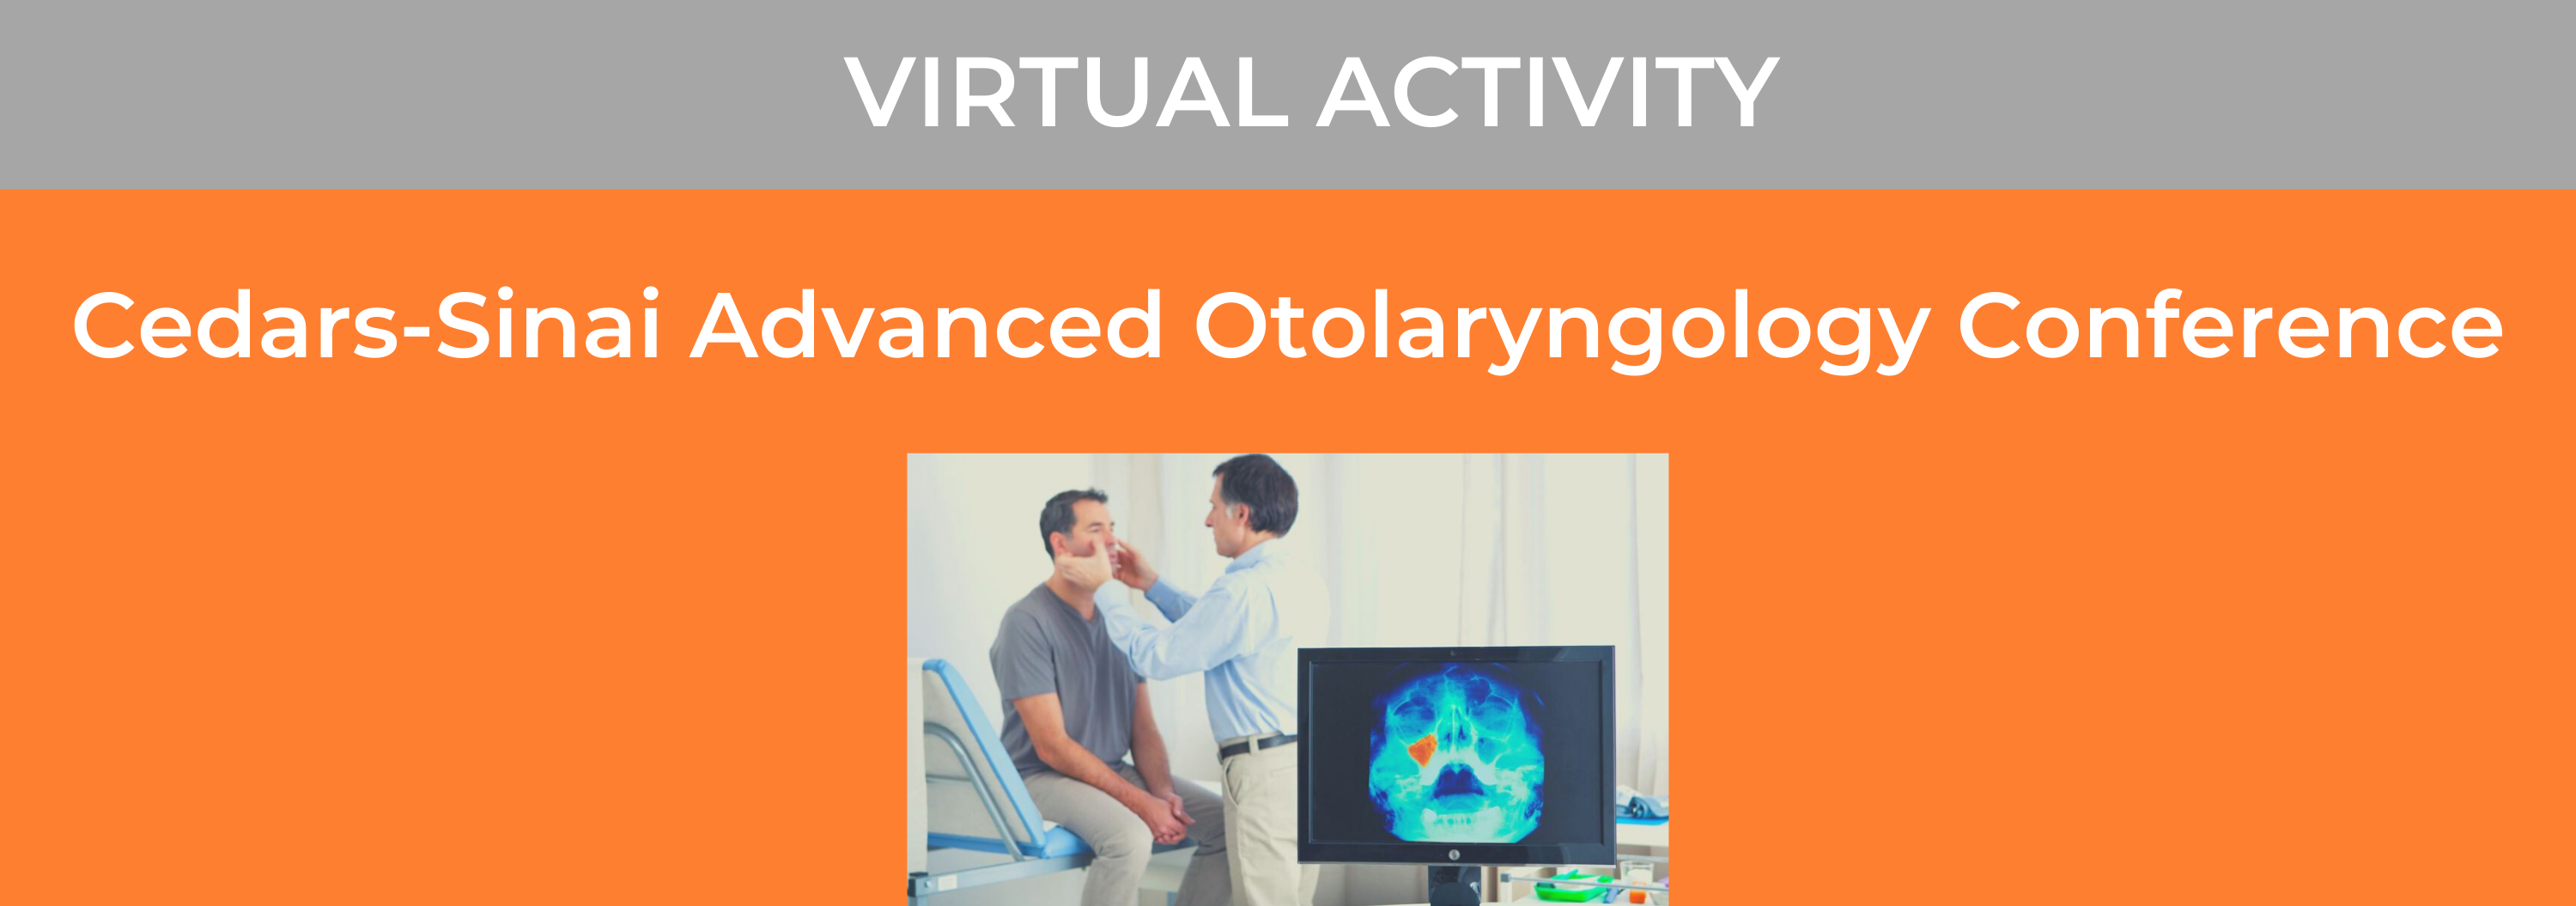 2021 Cedars-Sinai Advanced Otolaryngology Banner